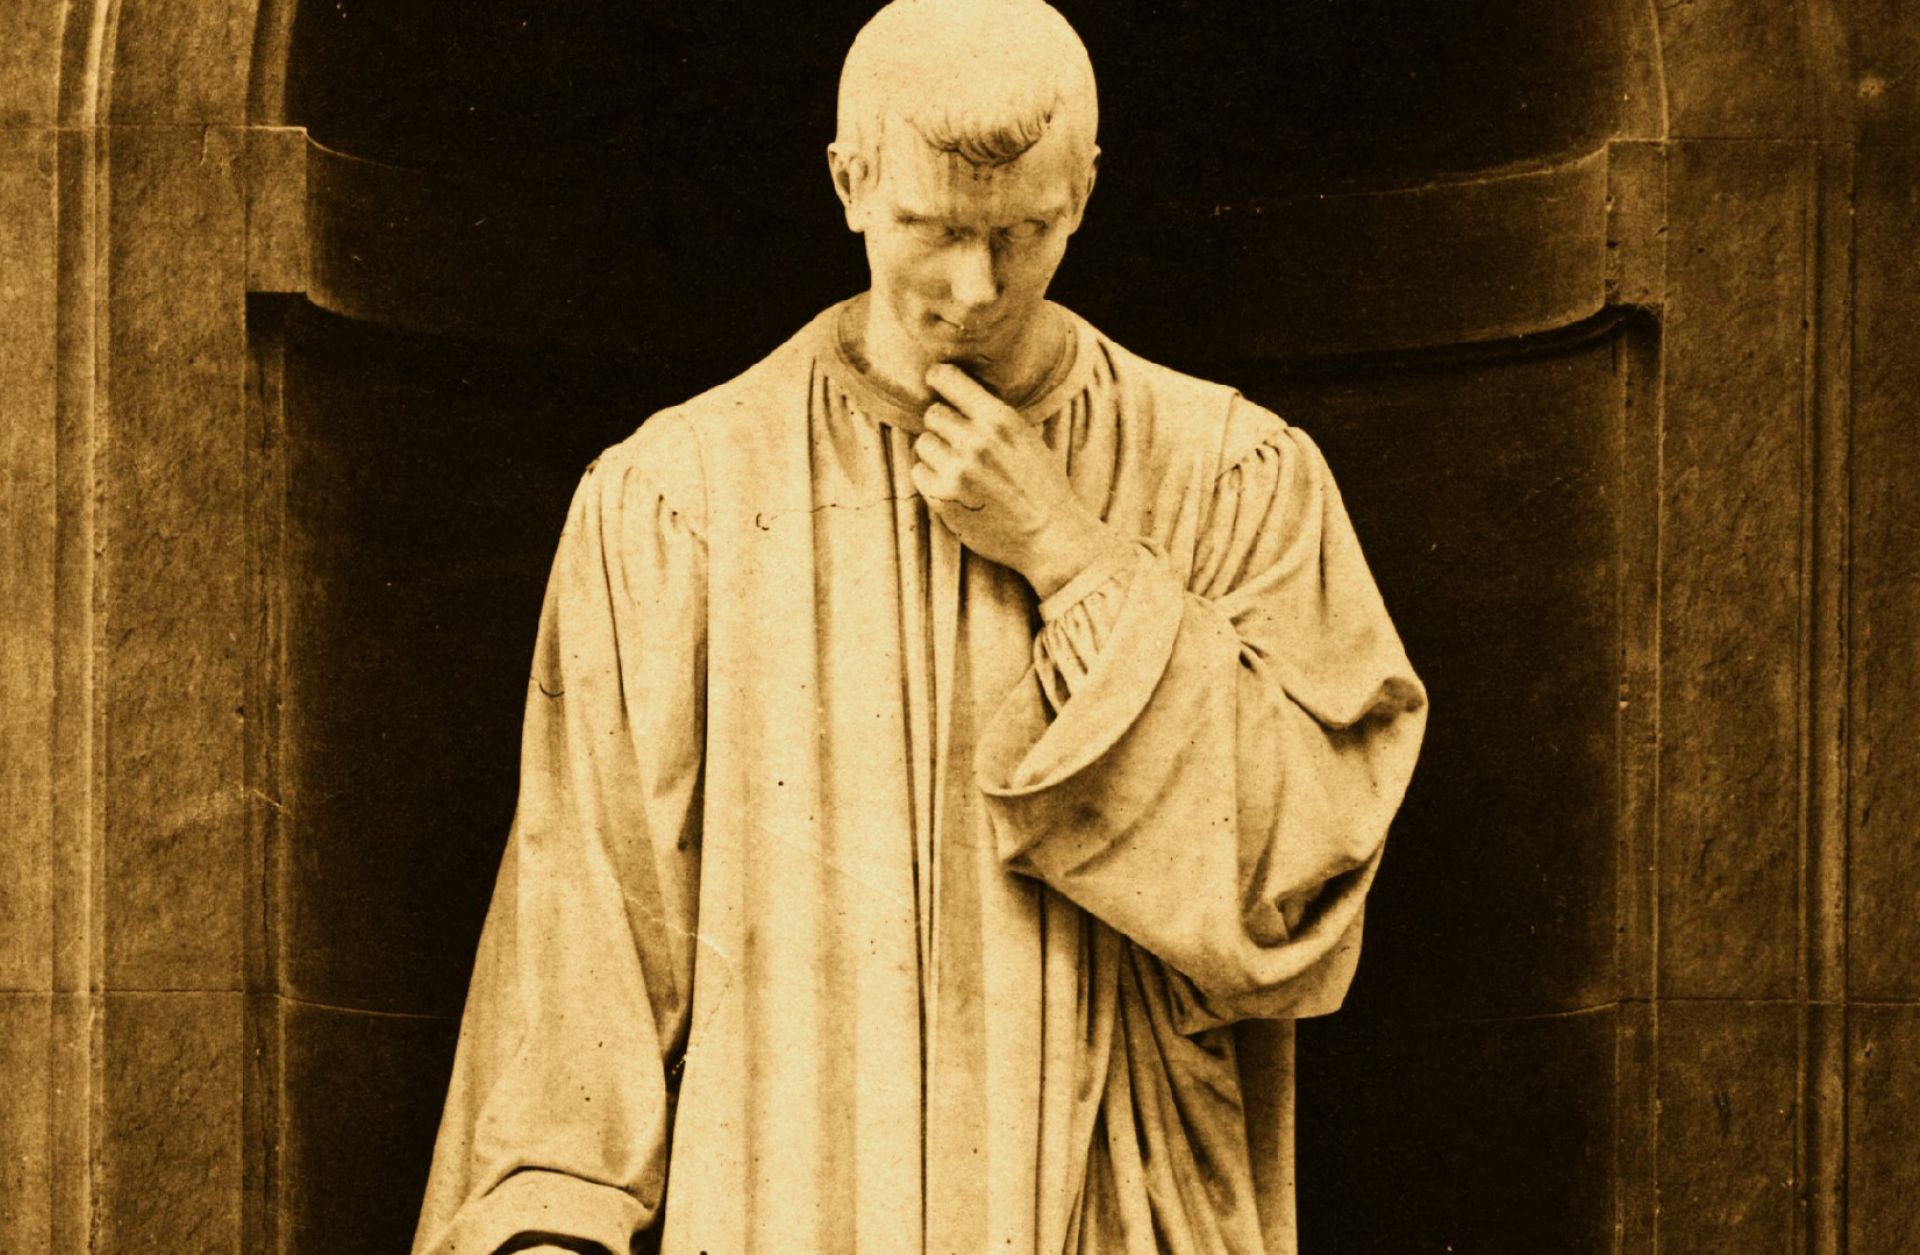 A statue of Italian statesman, philosopher and writer Niccolo Machiavelli, circa 1500.